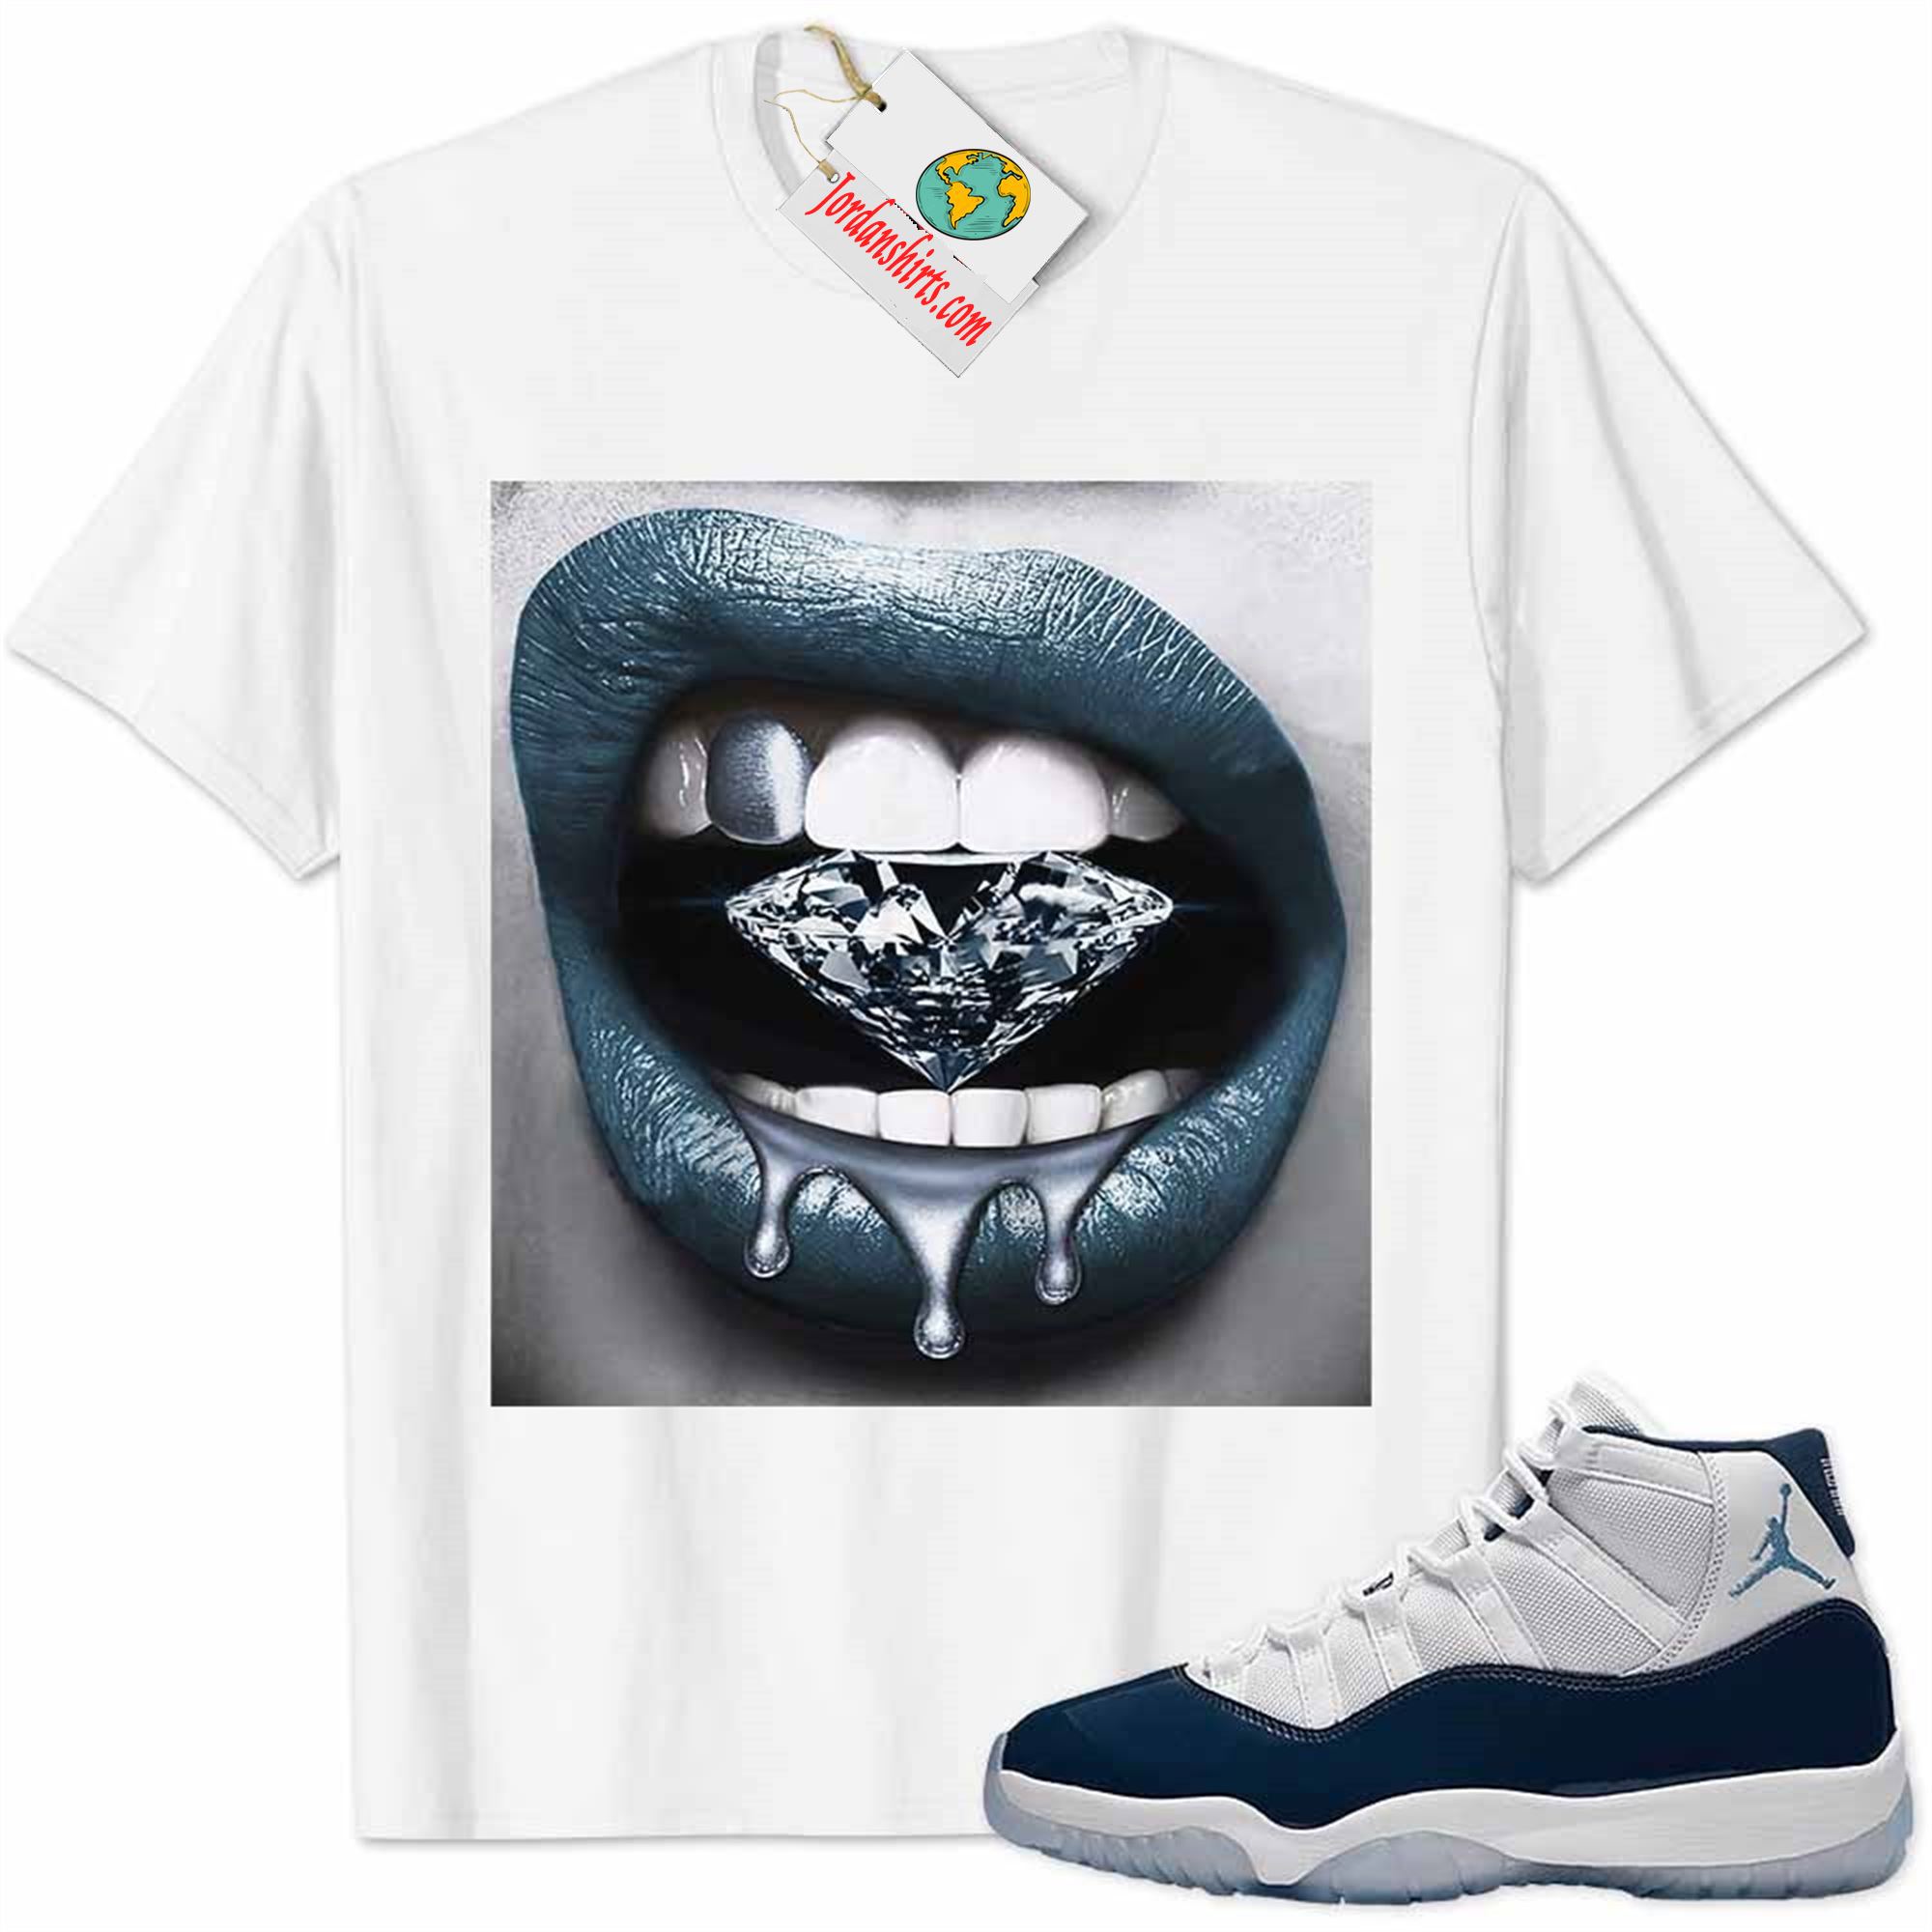 Jordan 11 Shirt, Jordan 11 Win Like 82 Shirt Sexy Lip Bite Diamond Dripping White Plus Size Up To 5xl